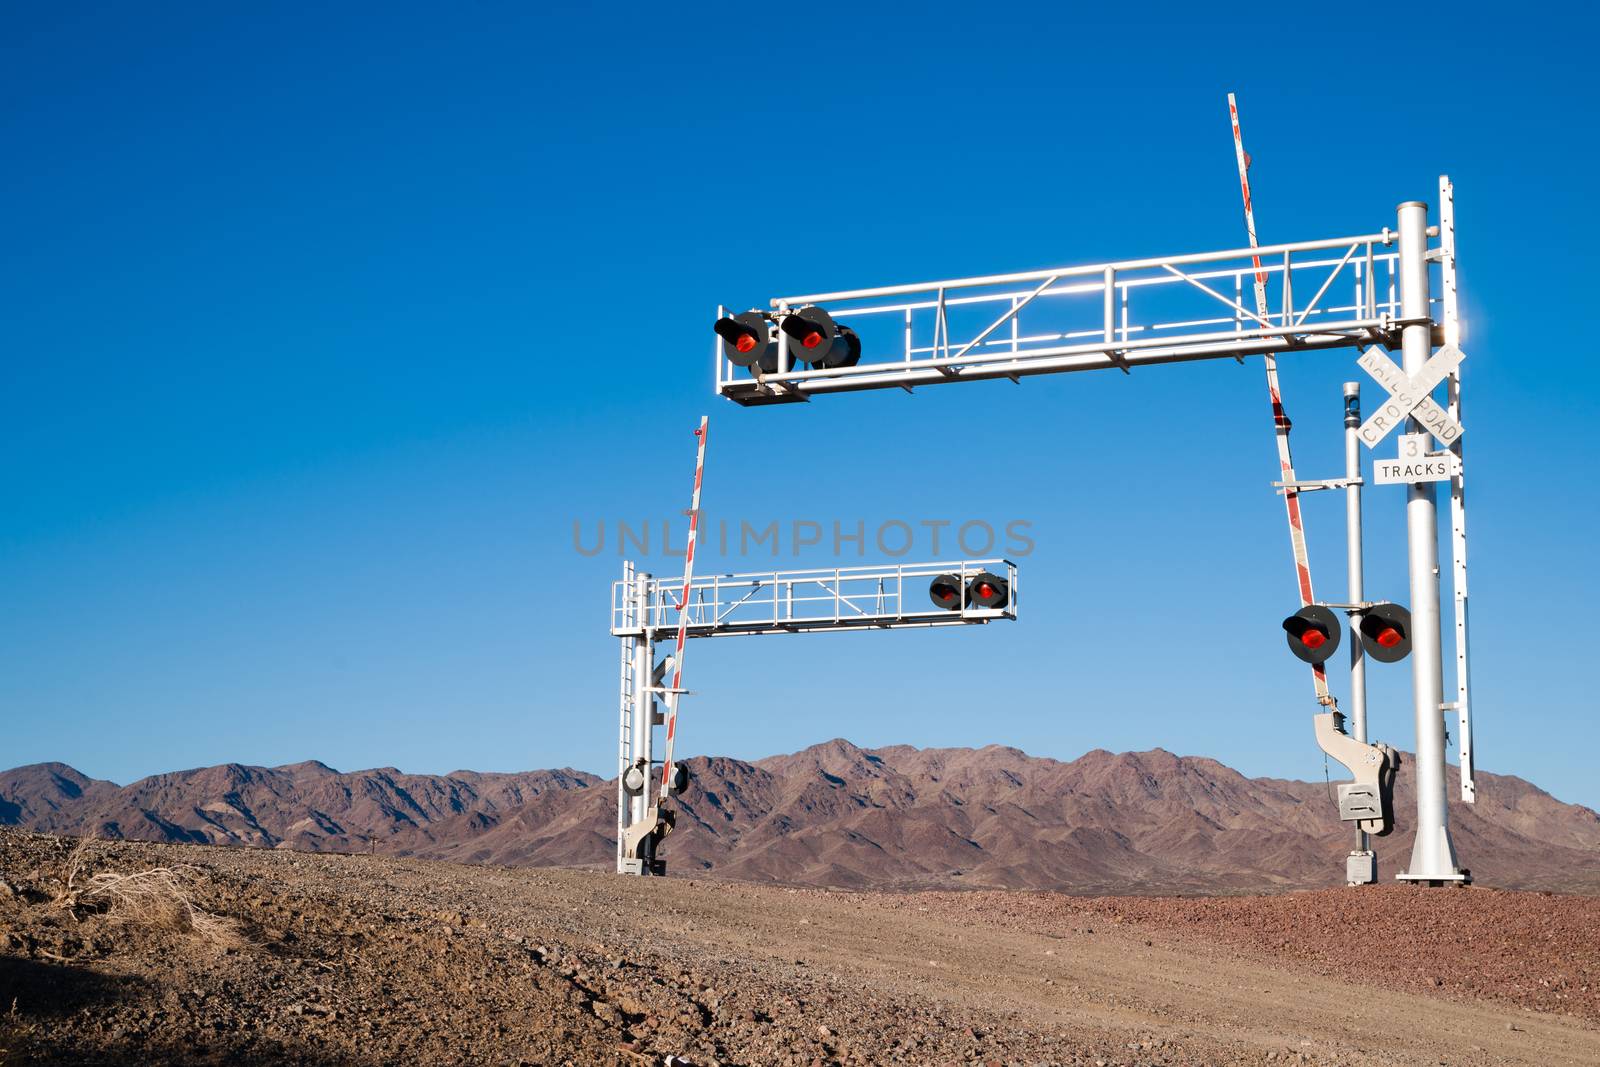 Mojave Desert Railroad Crossing Three Tracks Warning Lights by ChrisBoswell